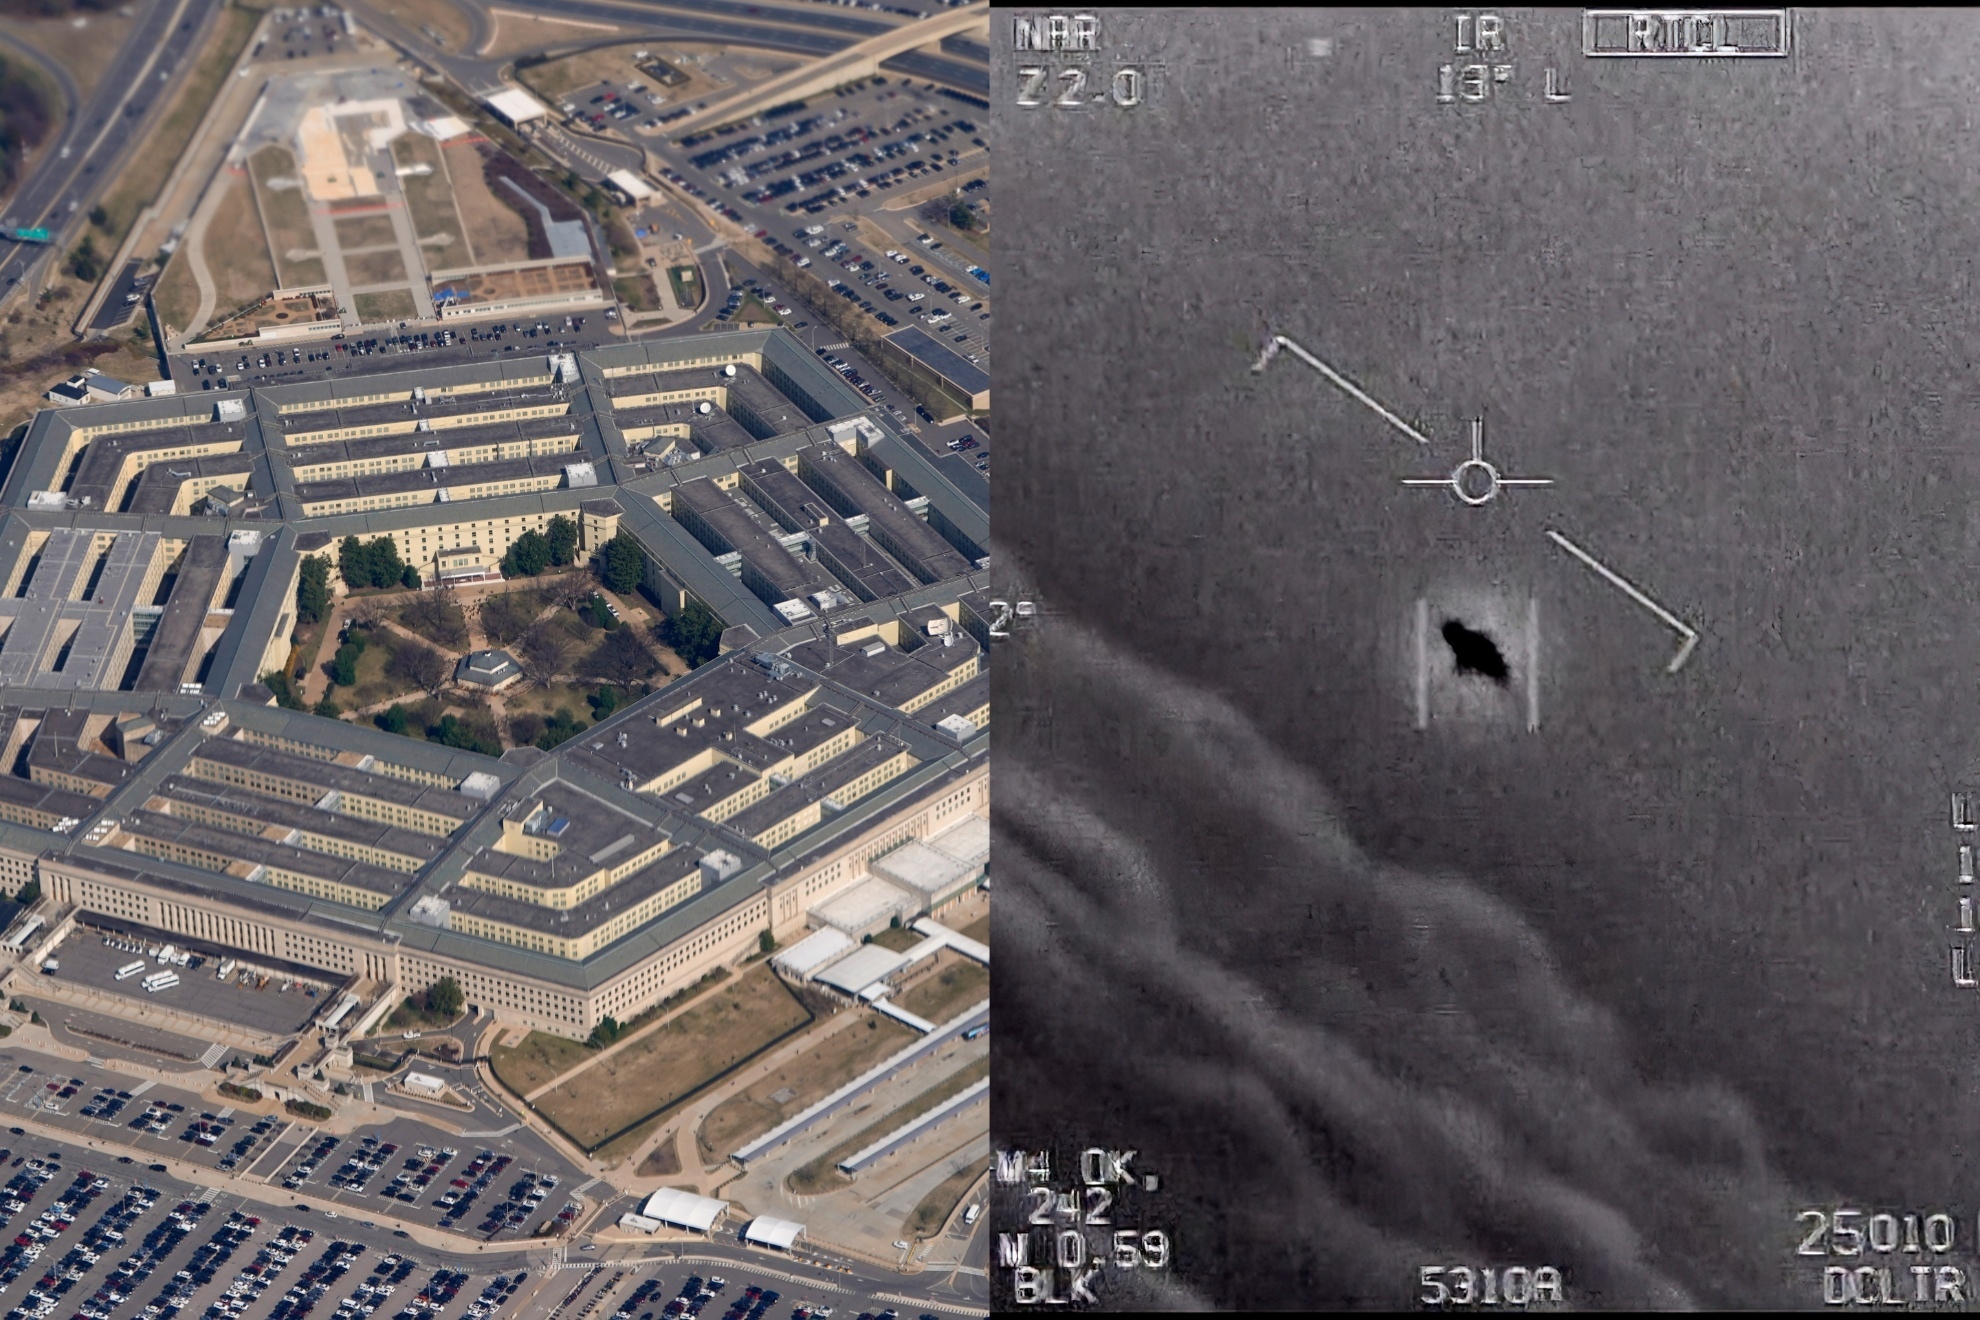 Mashup image of the U.S. Pentagon and a UFO